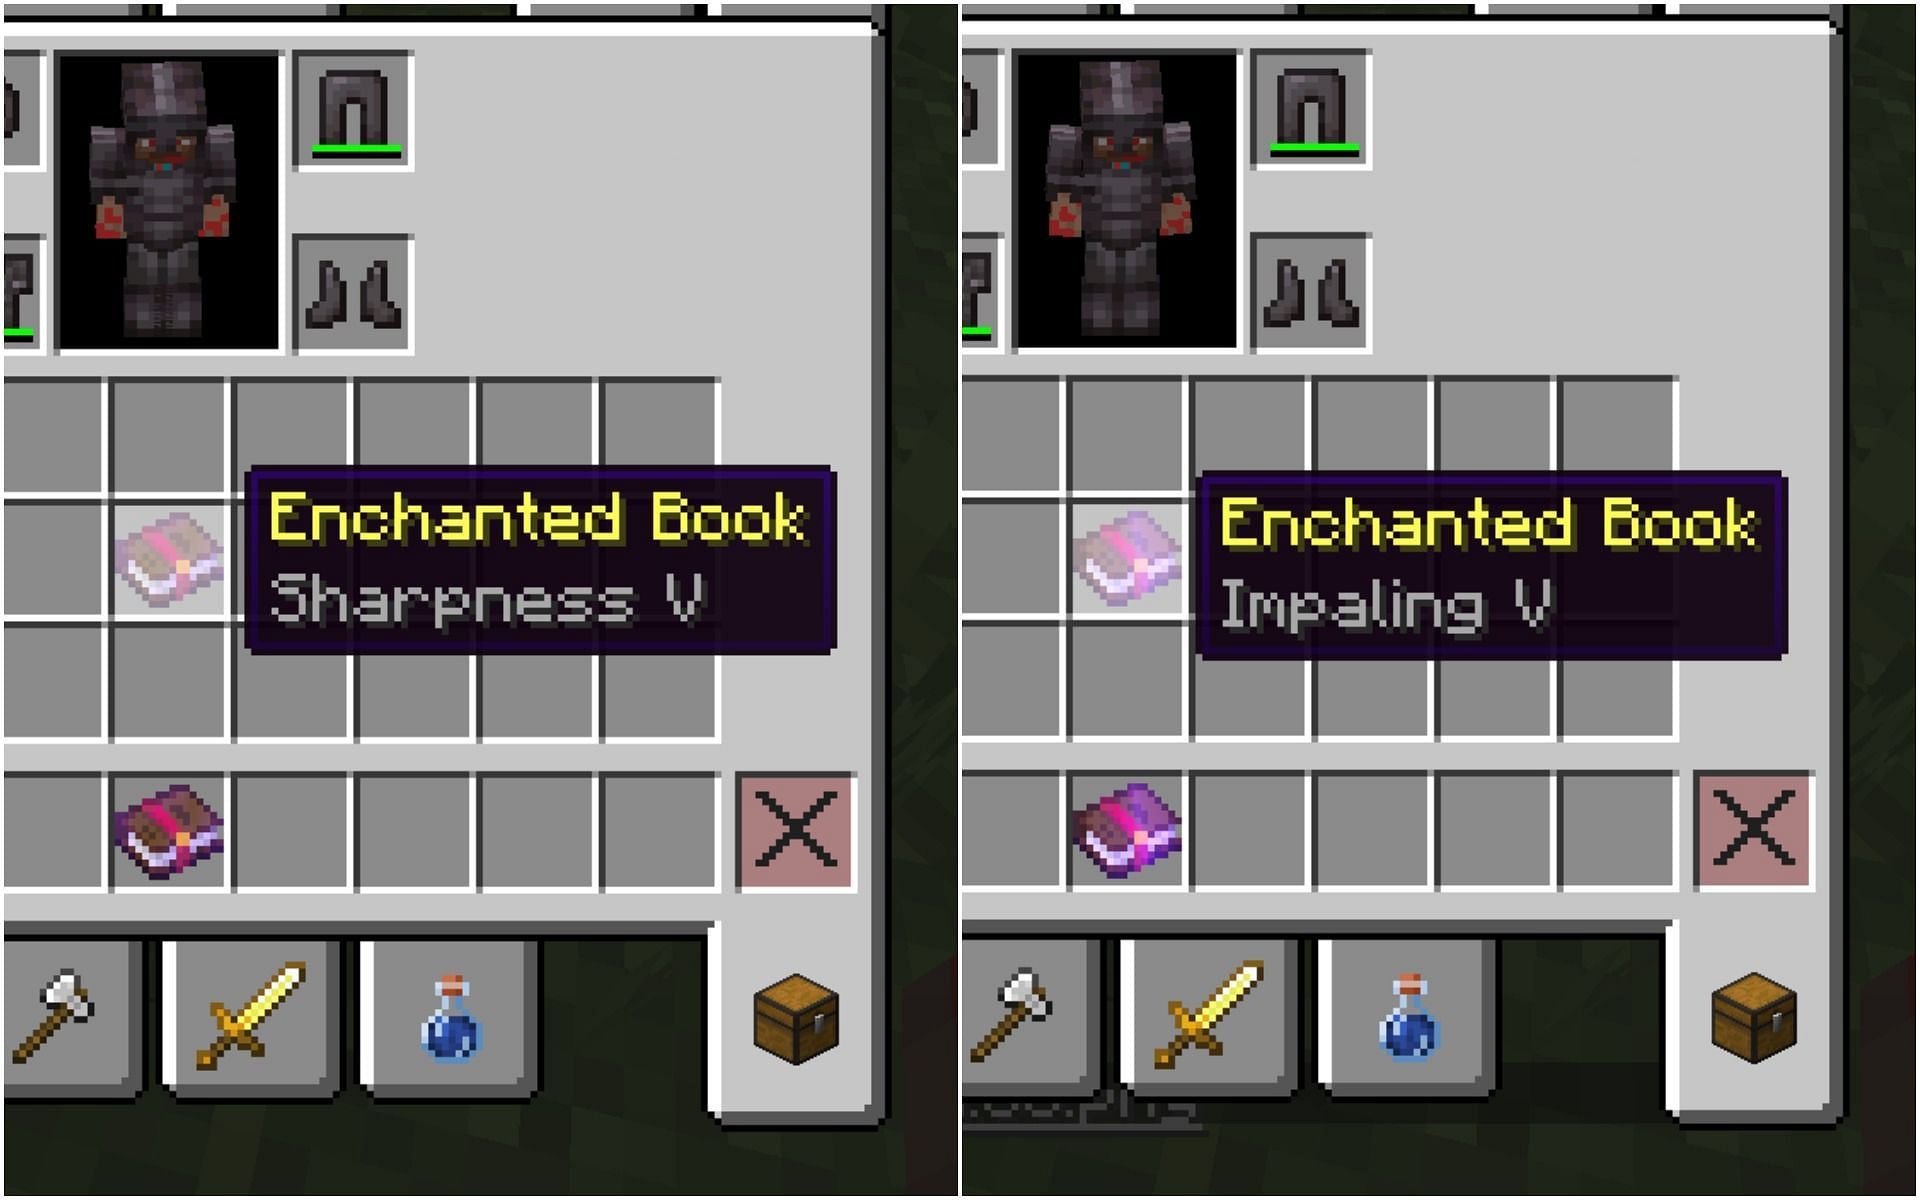 Sharpness and Impaling enchanted books (Image via Minecraft)